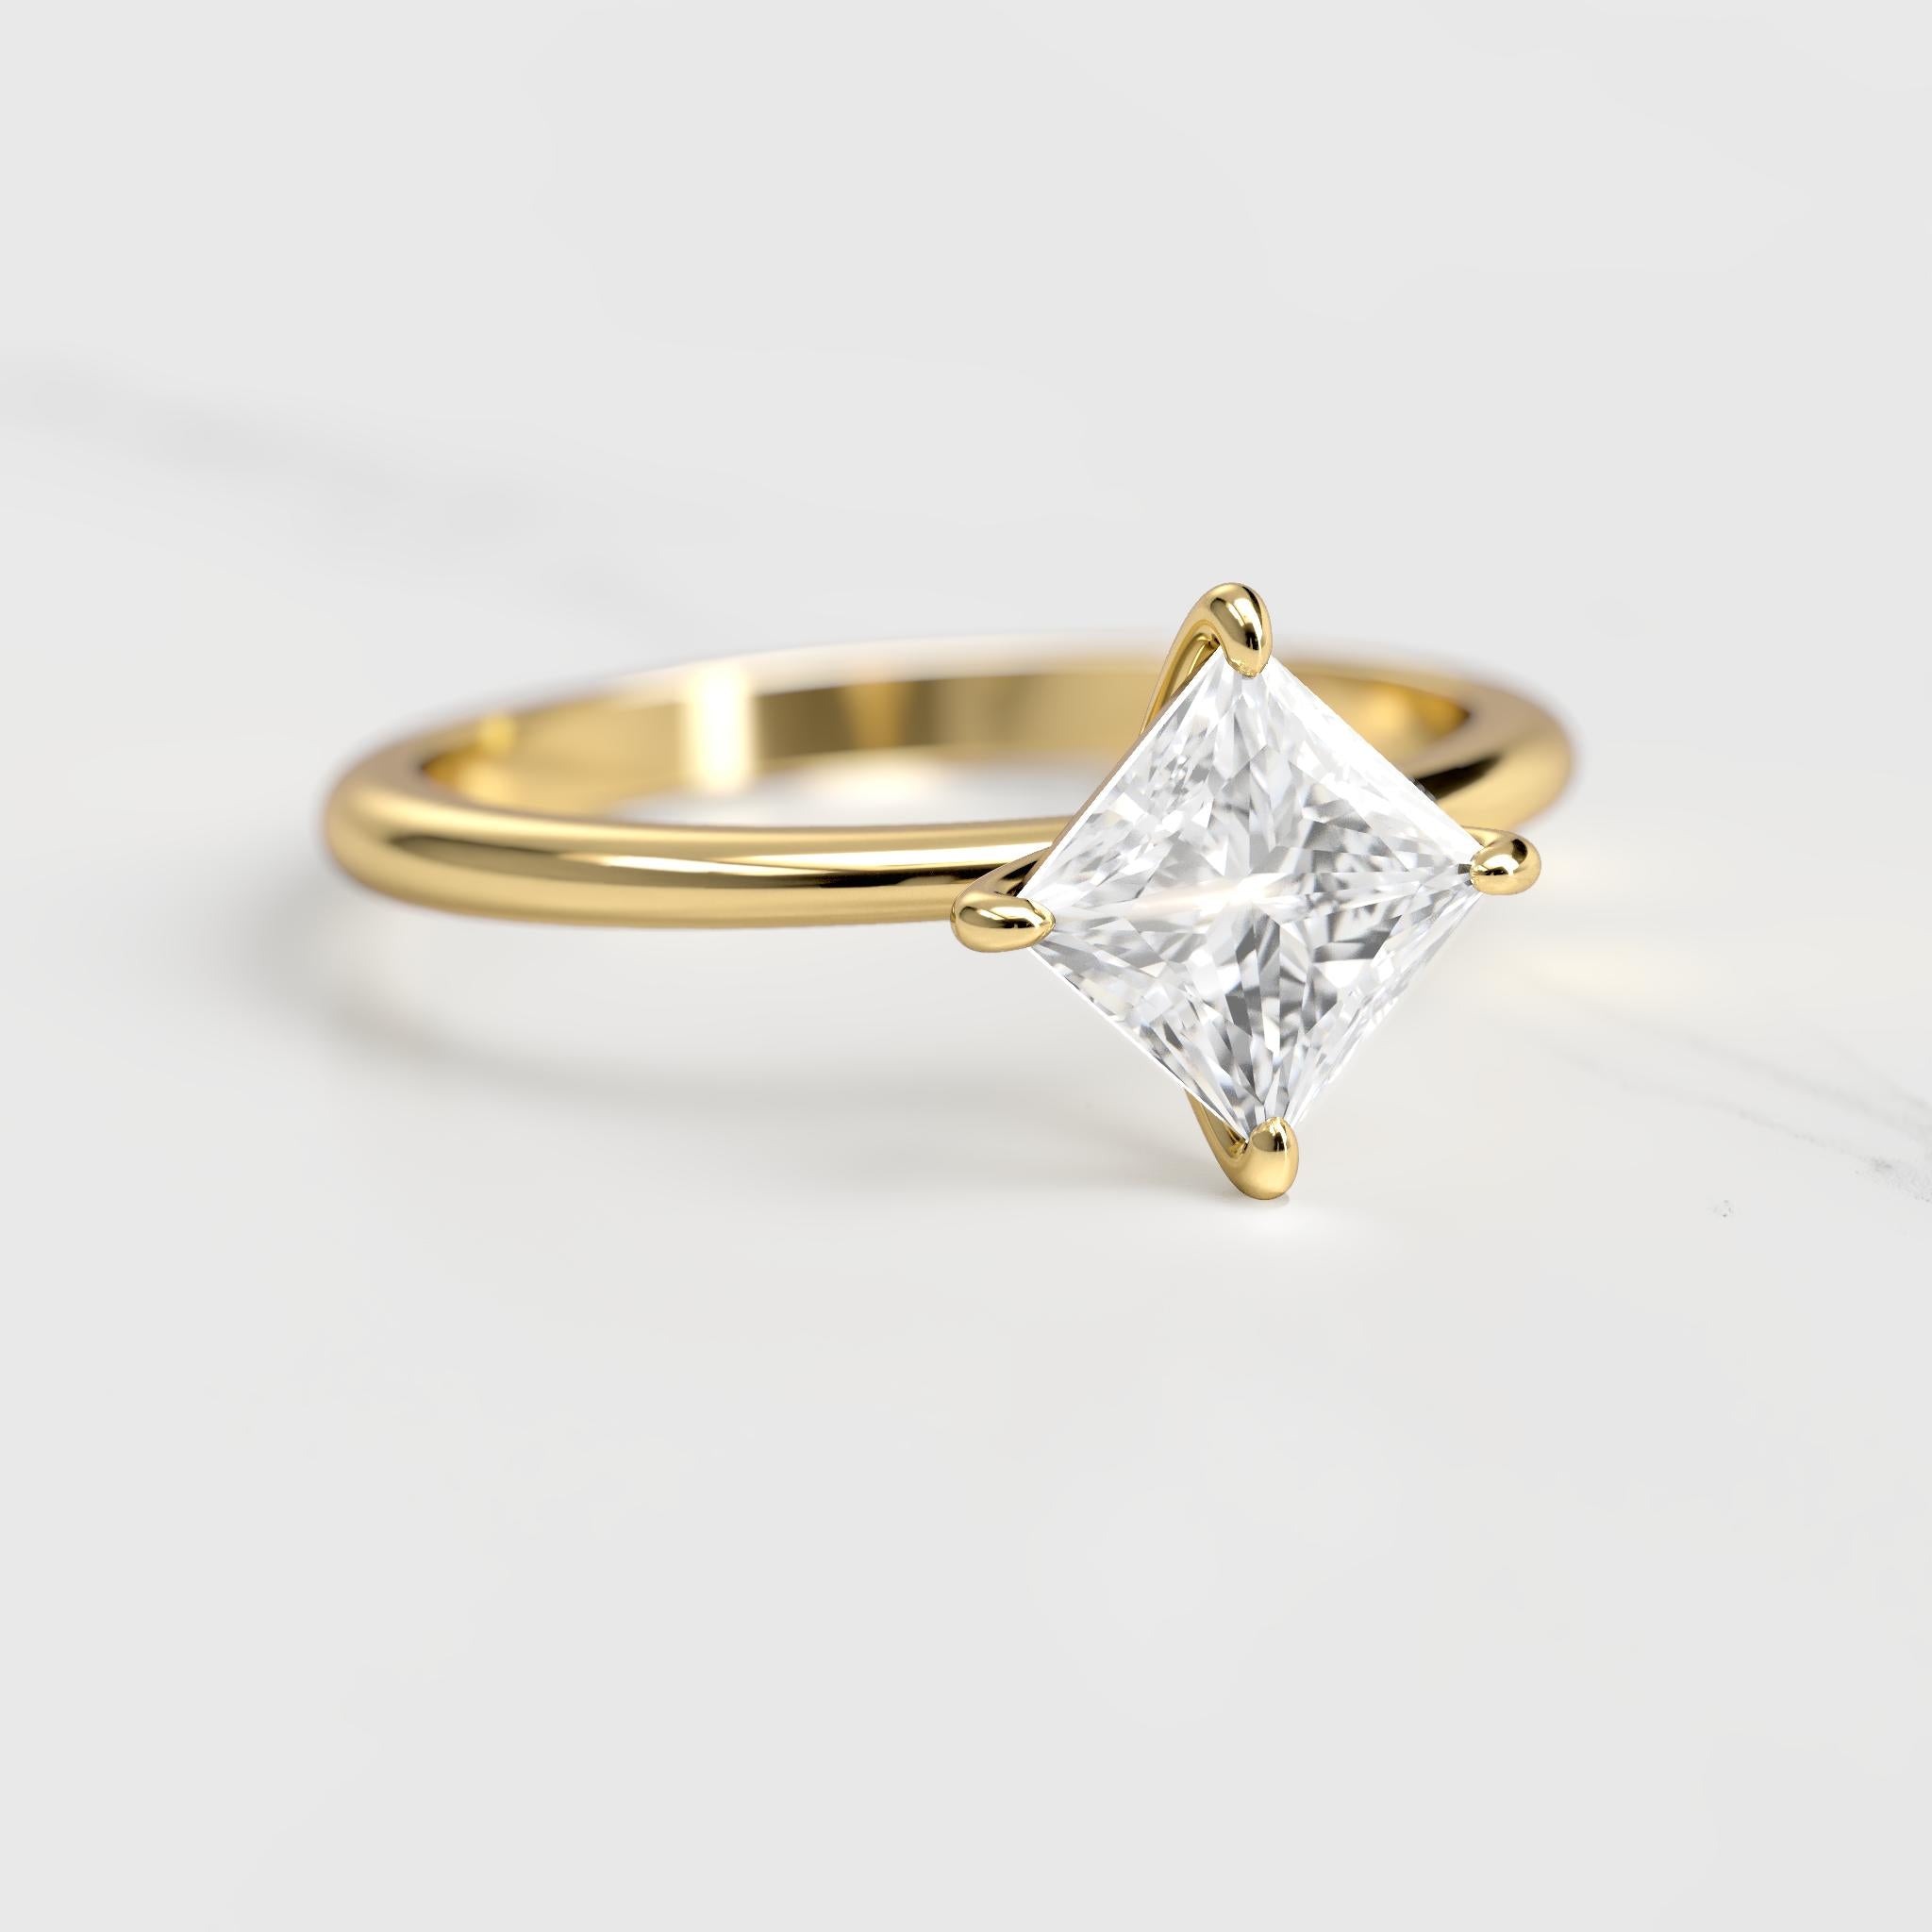 Princess Tapered Solitaire Diamond Ring - 18k white gold / 0.3ct / natural diamond